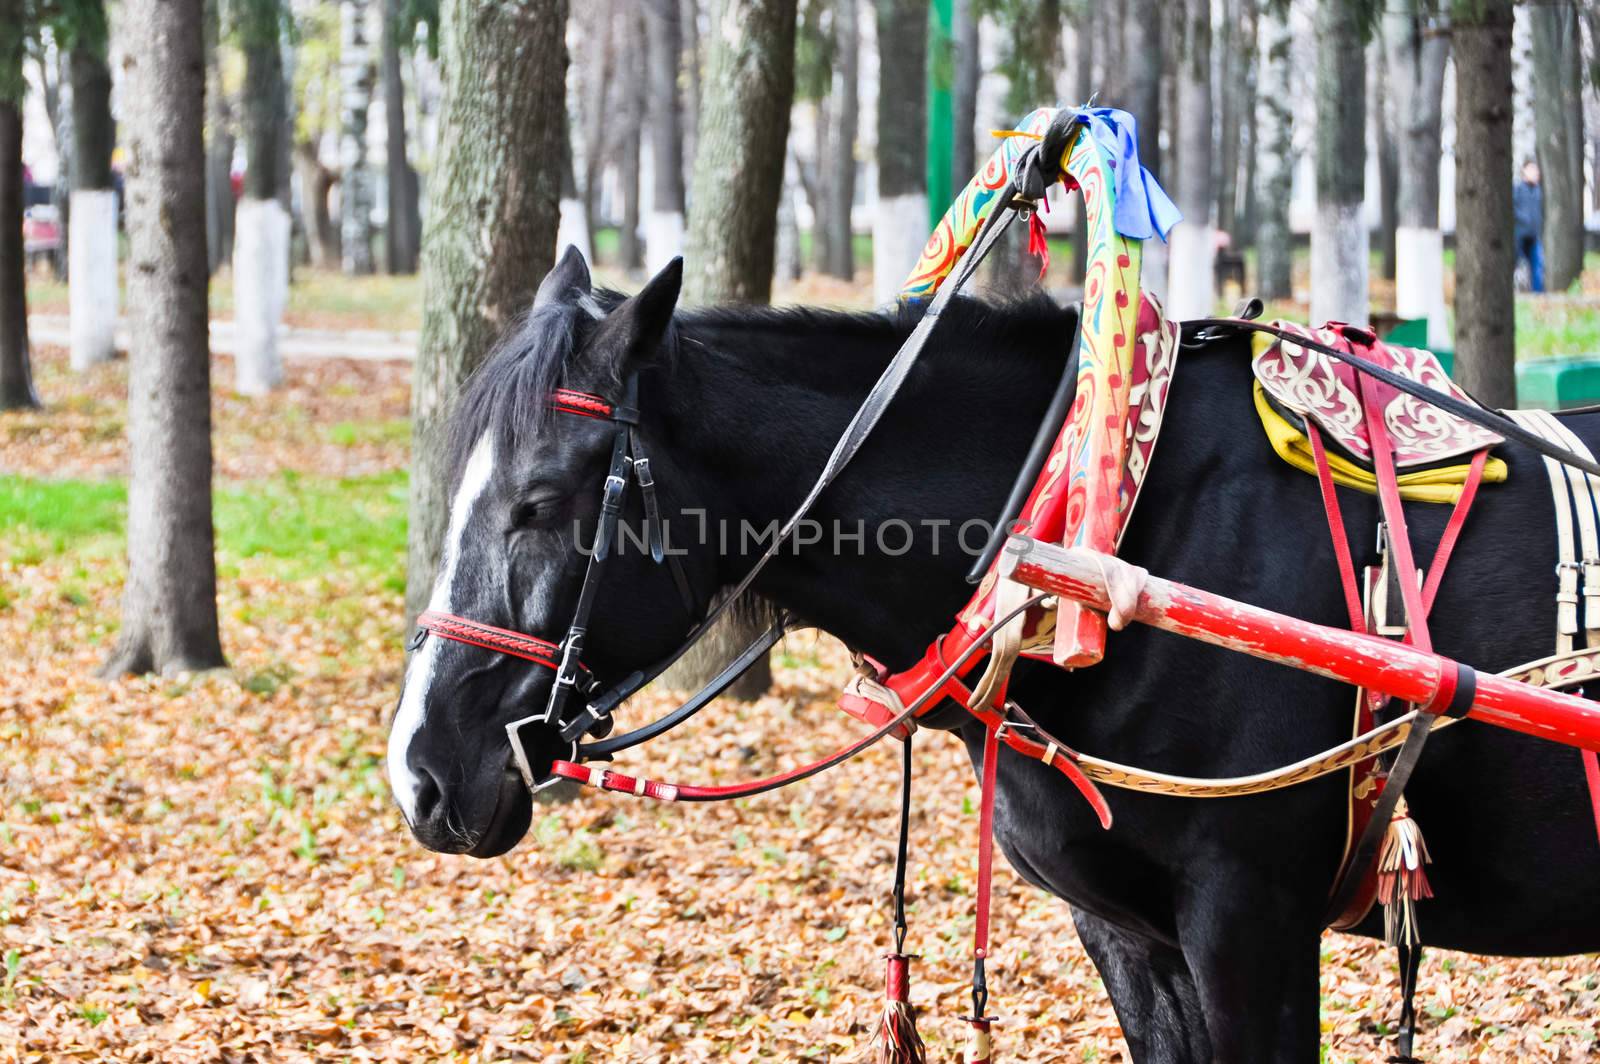 black horse in multicolored harness  by vlaru